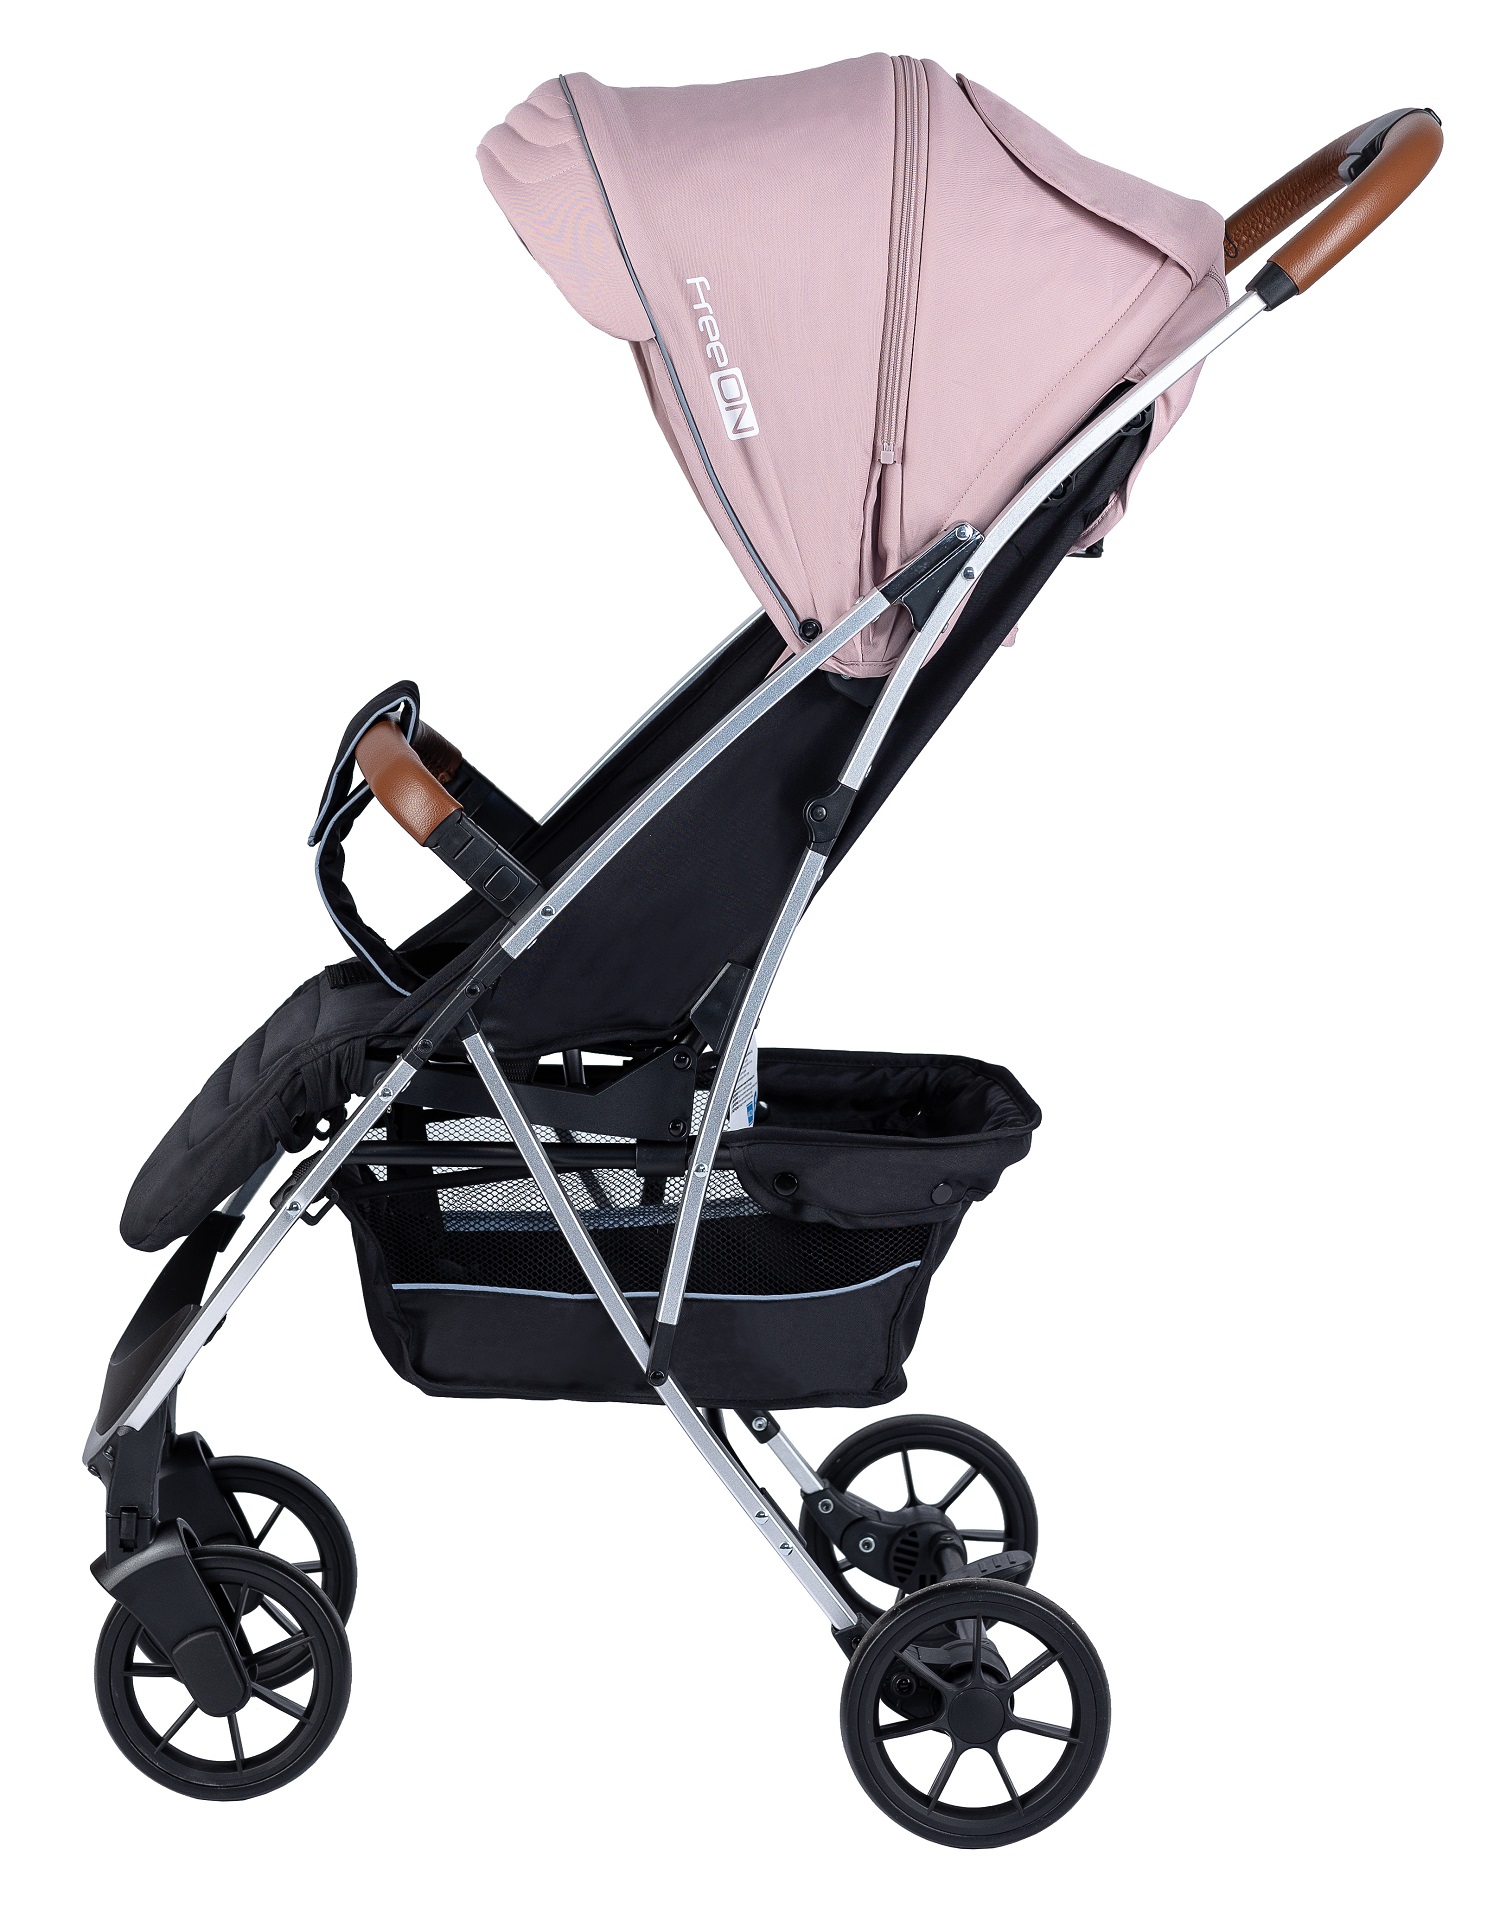 Прогулочная коляска для ребенка FreeON LUX Premium Dusty Pink-Black - фото 3